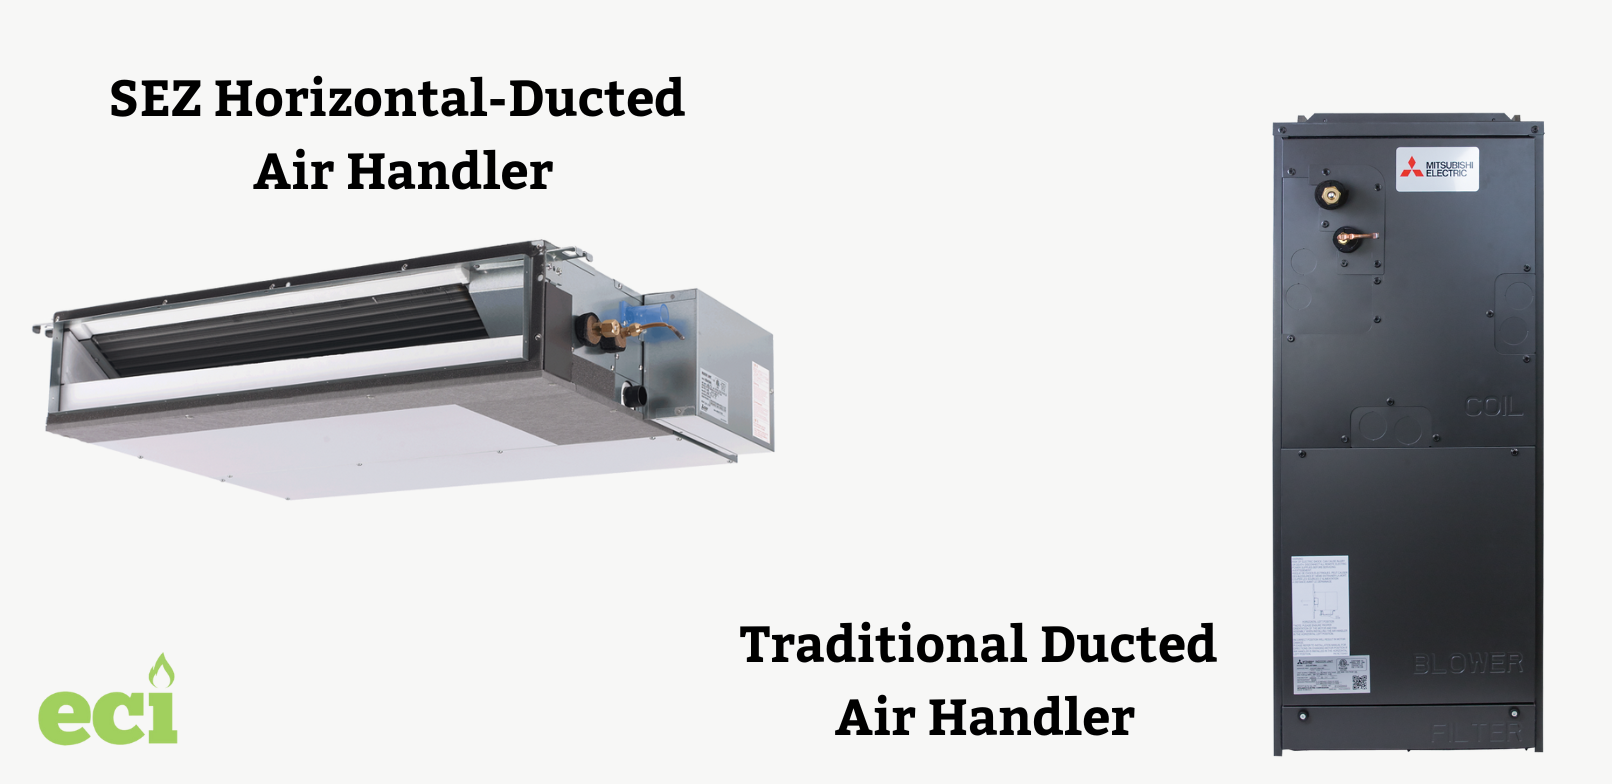 SEZ Horizontal-Ducted Air Handler Vs Traditional